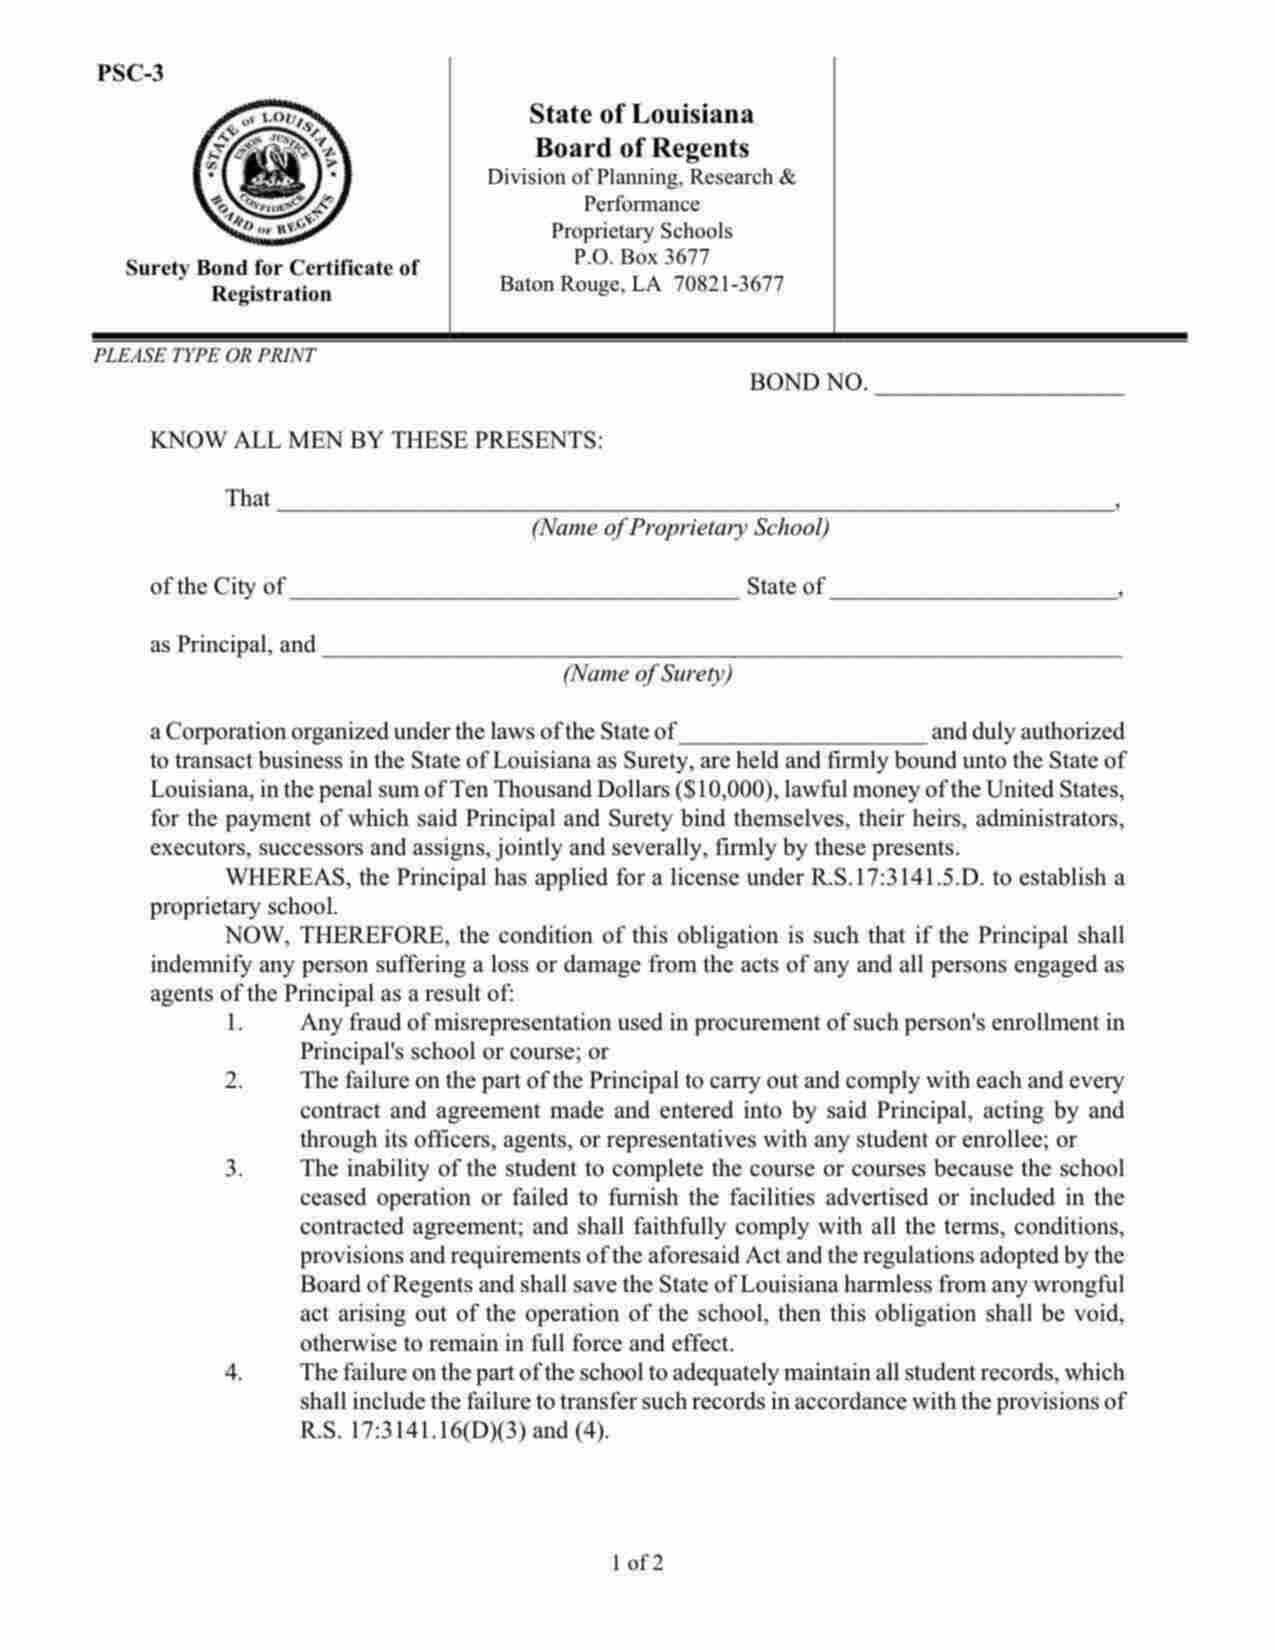 Louisiana Proprietary School - Certificate of Registration Bond Form